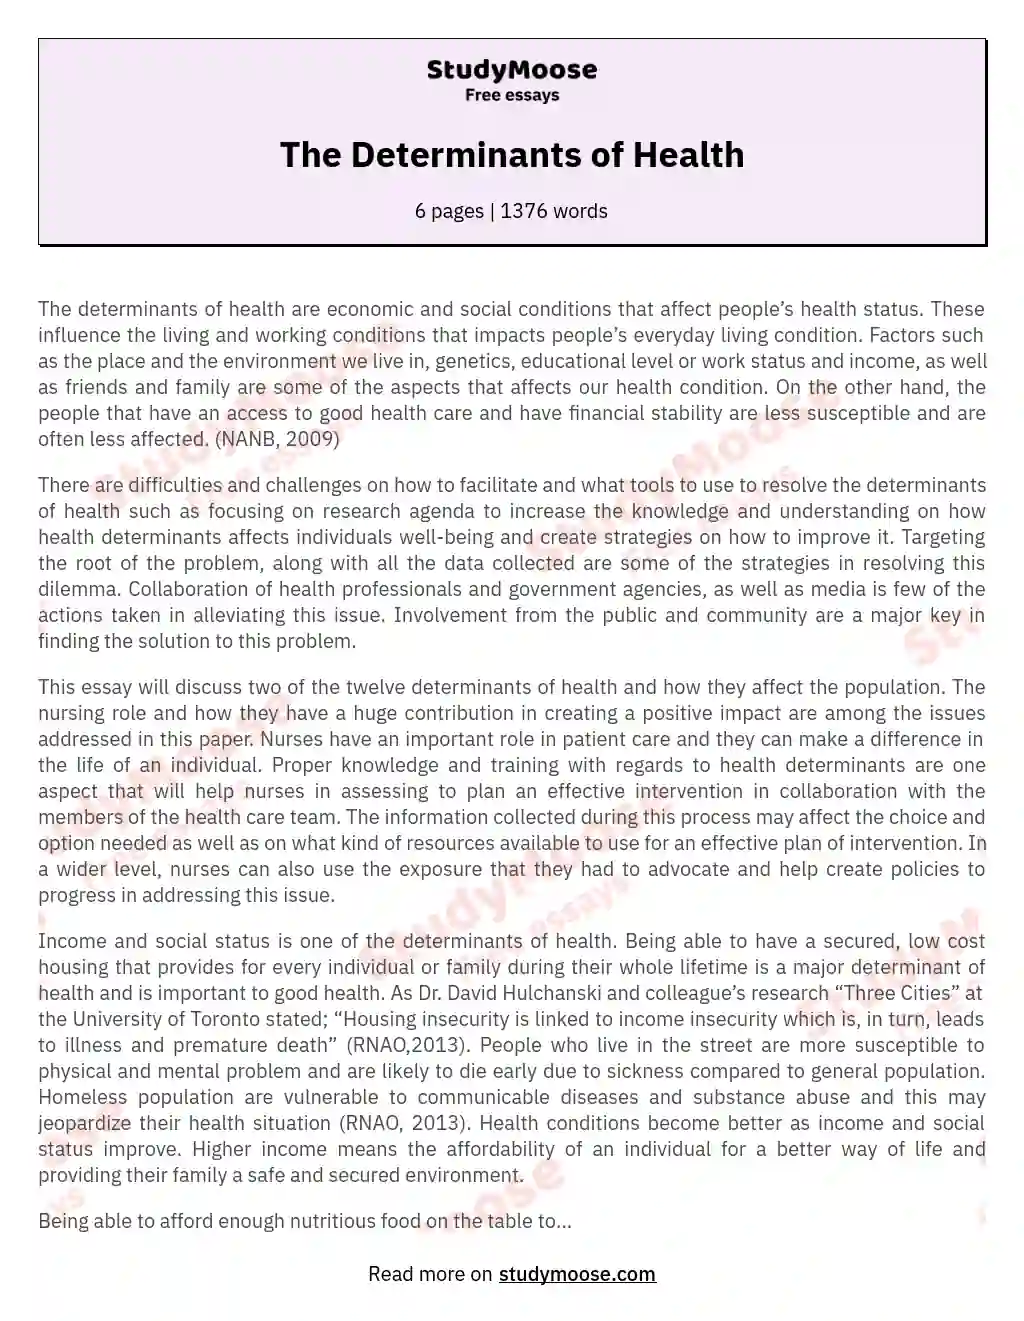 The Determinants of Health essay